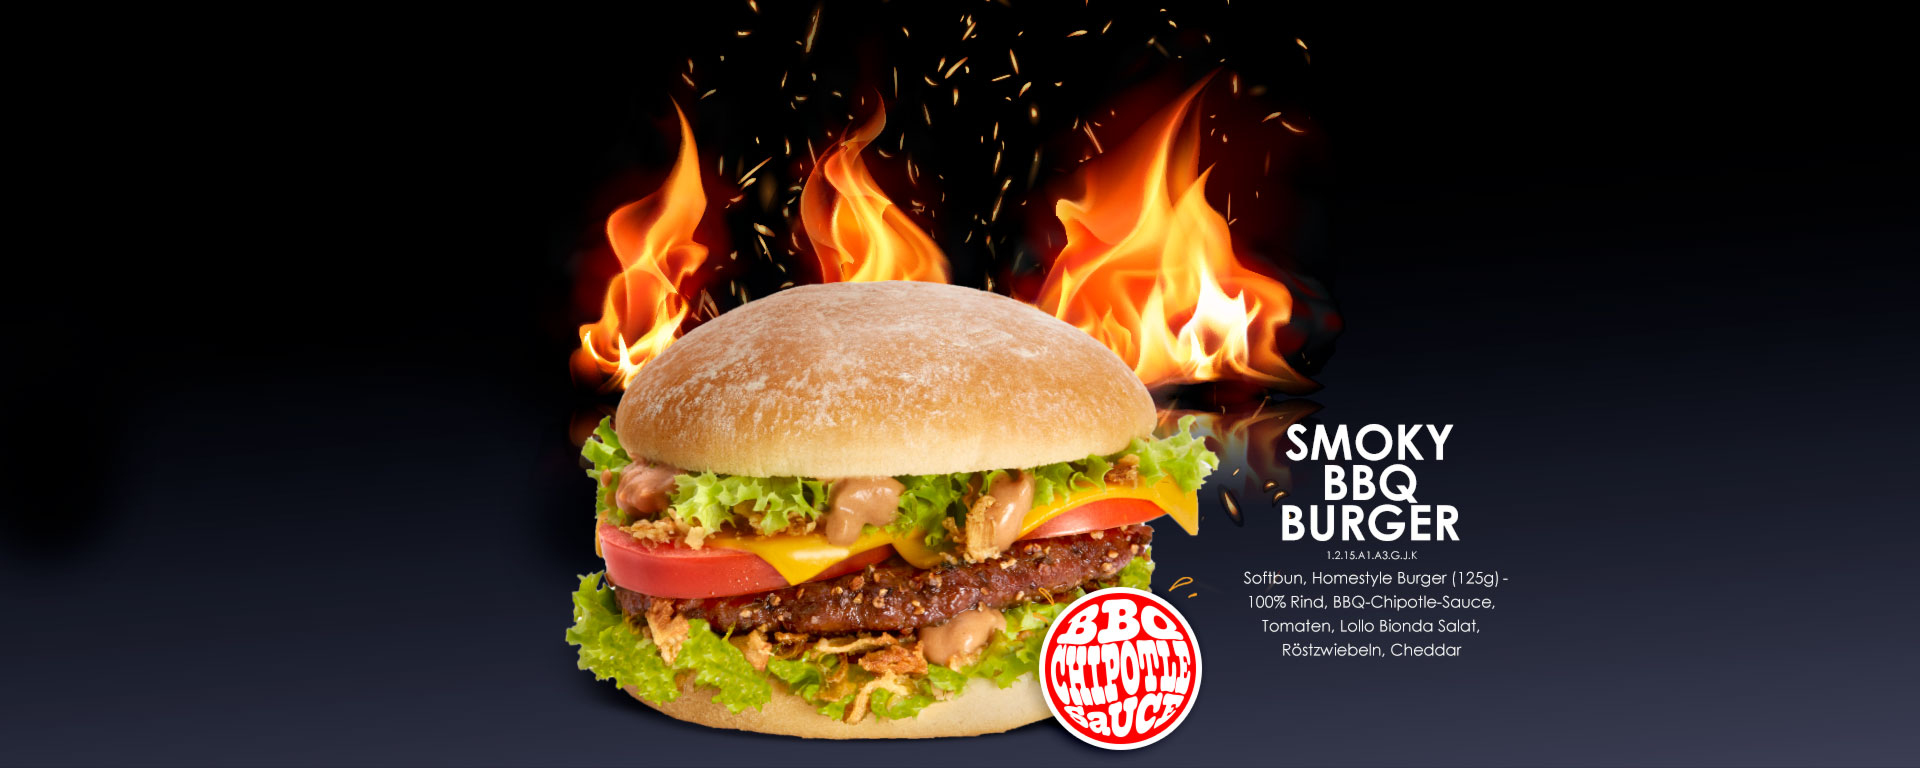 Smoky BBQ Burger